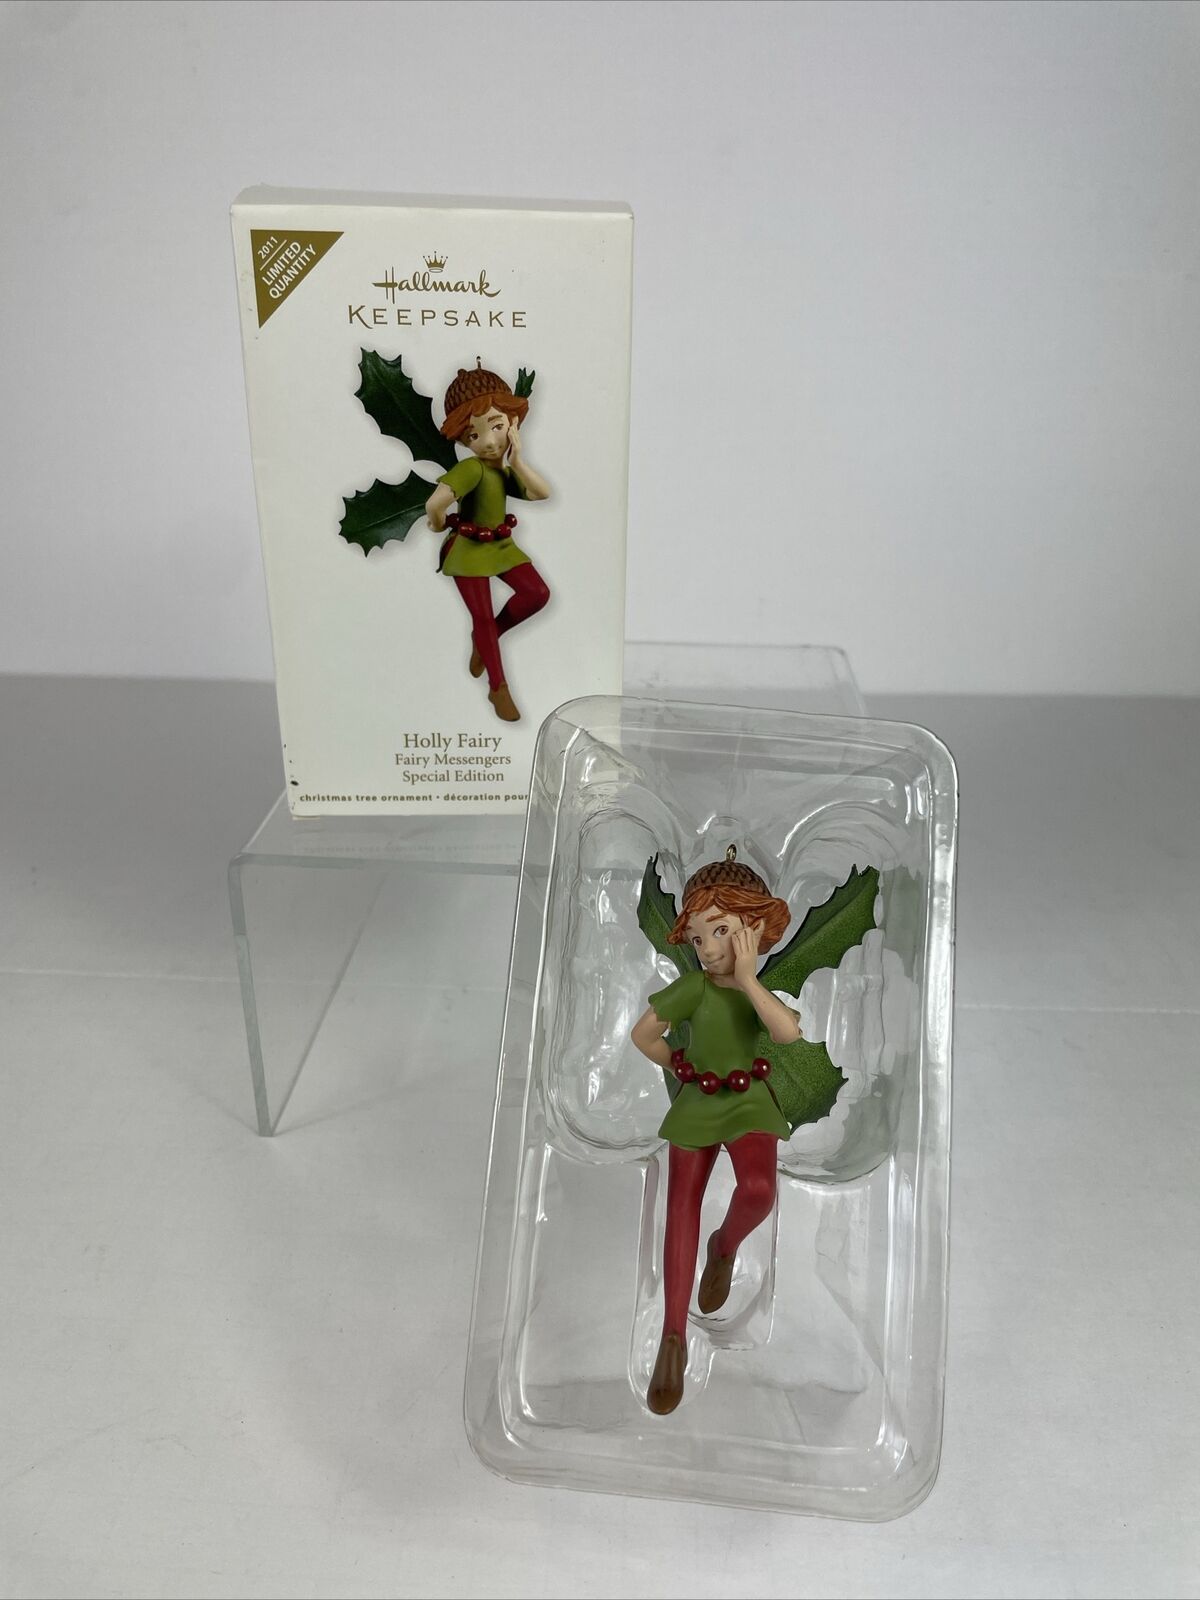 Hallmark Keepsake 2011 Christmas Ornament Holly Fairy Messengers Special Edition